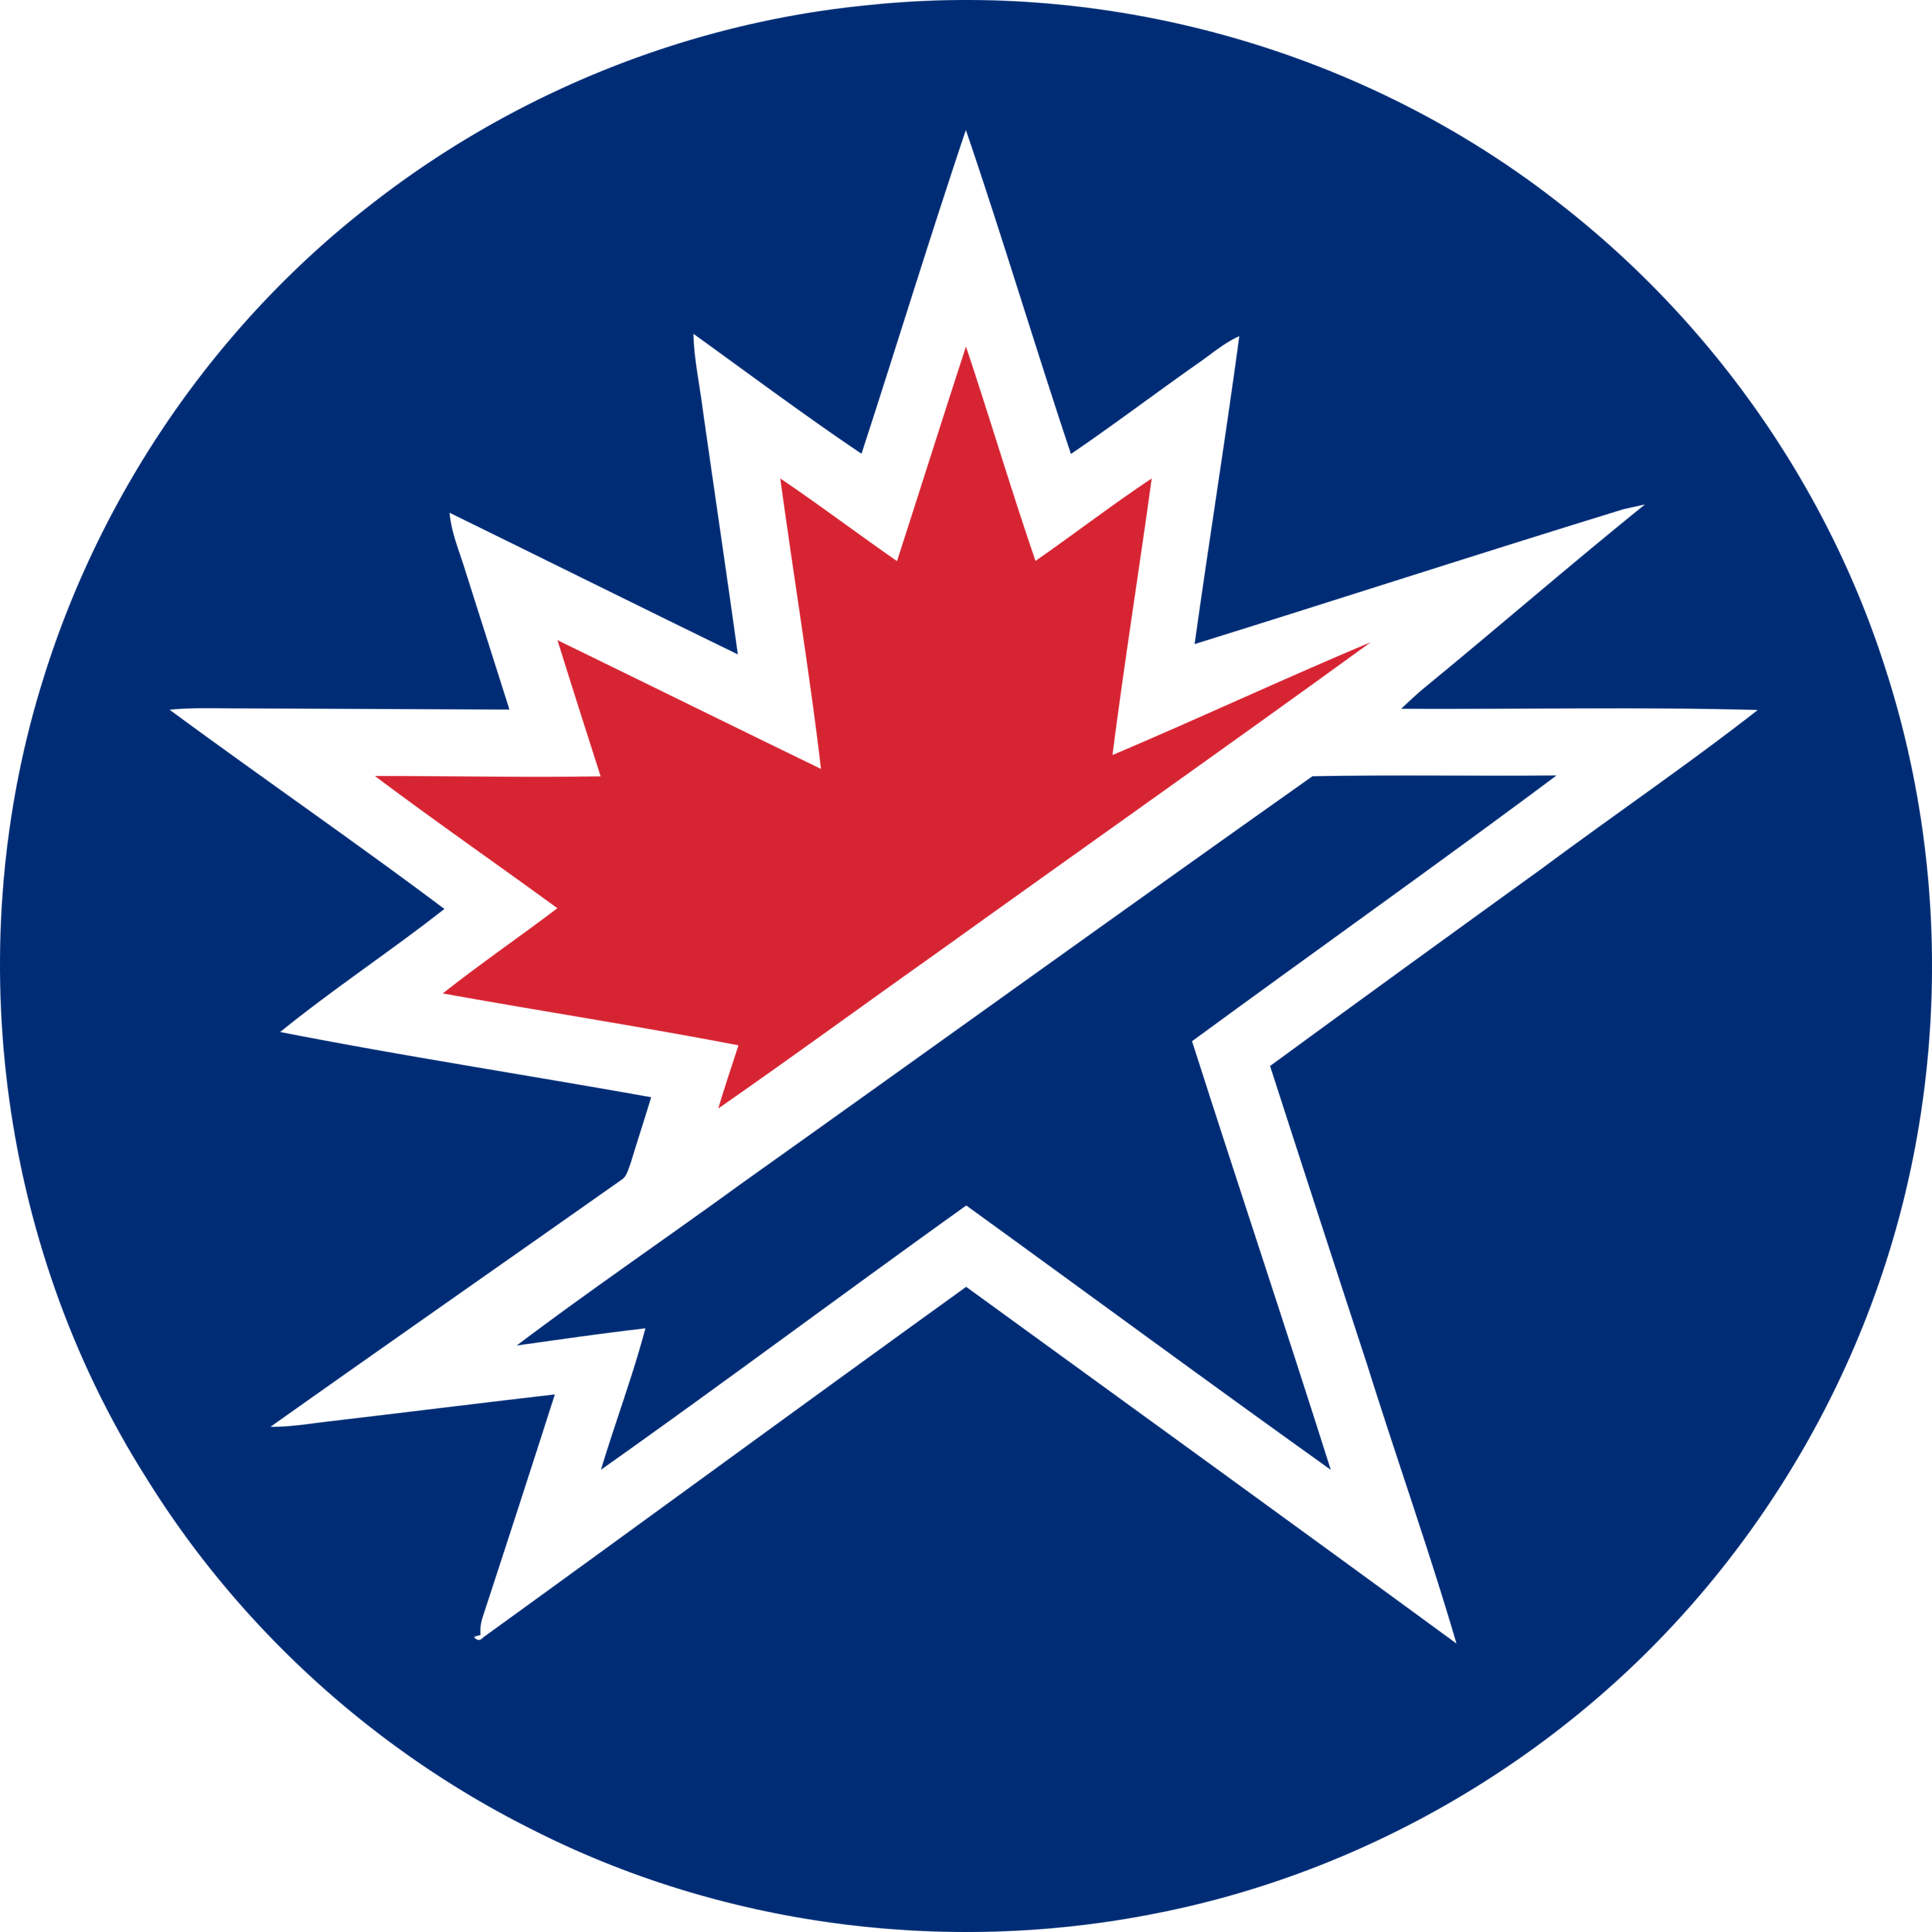 Chris Creamer's SportsLogos.net Logo icon